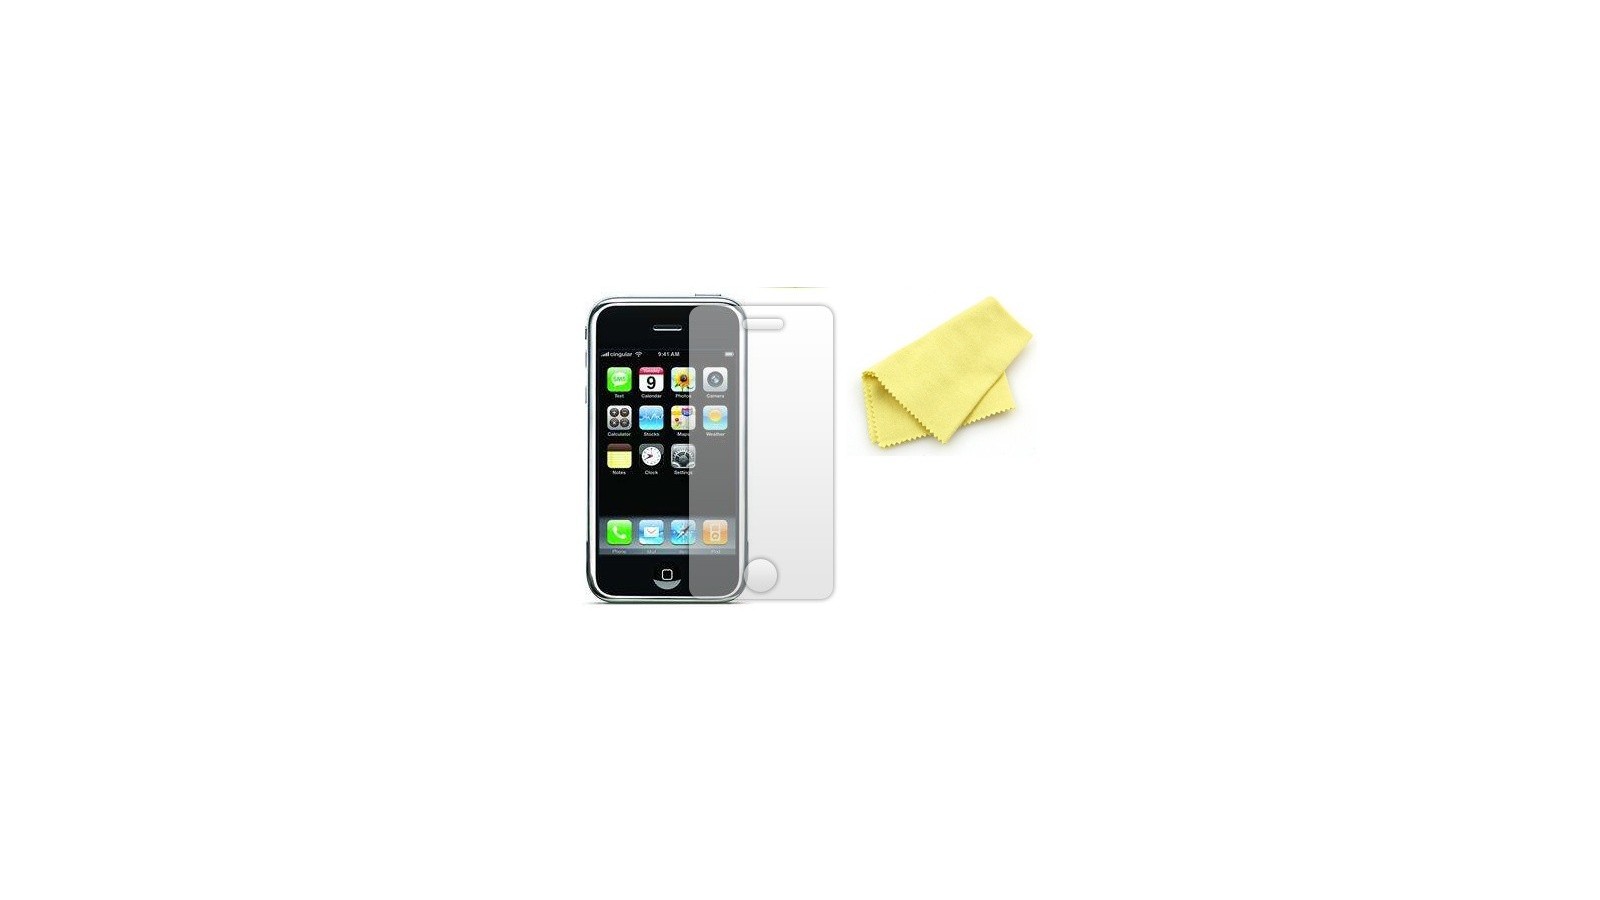 Pellicola protettiva per Apple iPhone 3G + panno